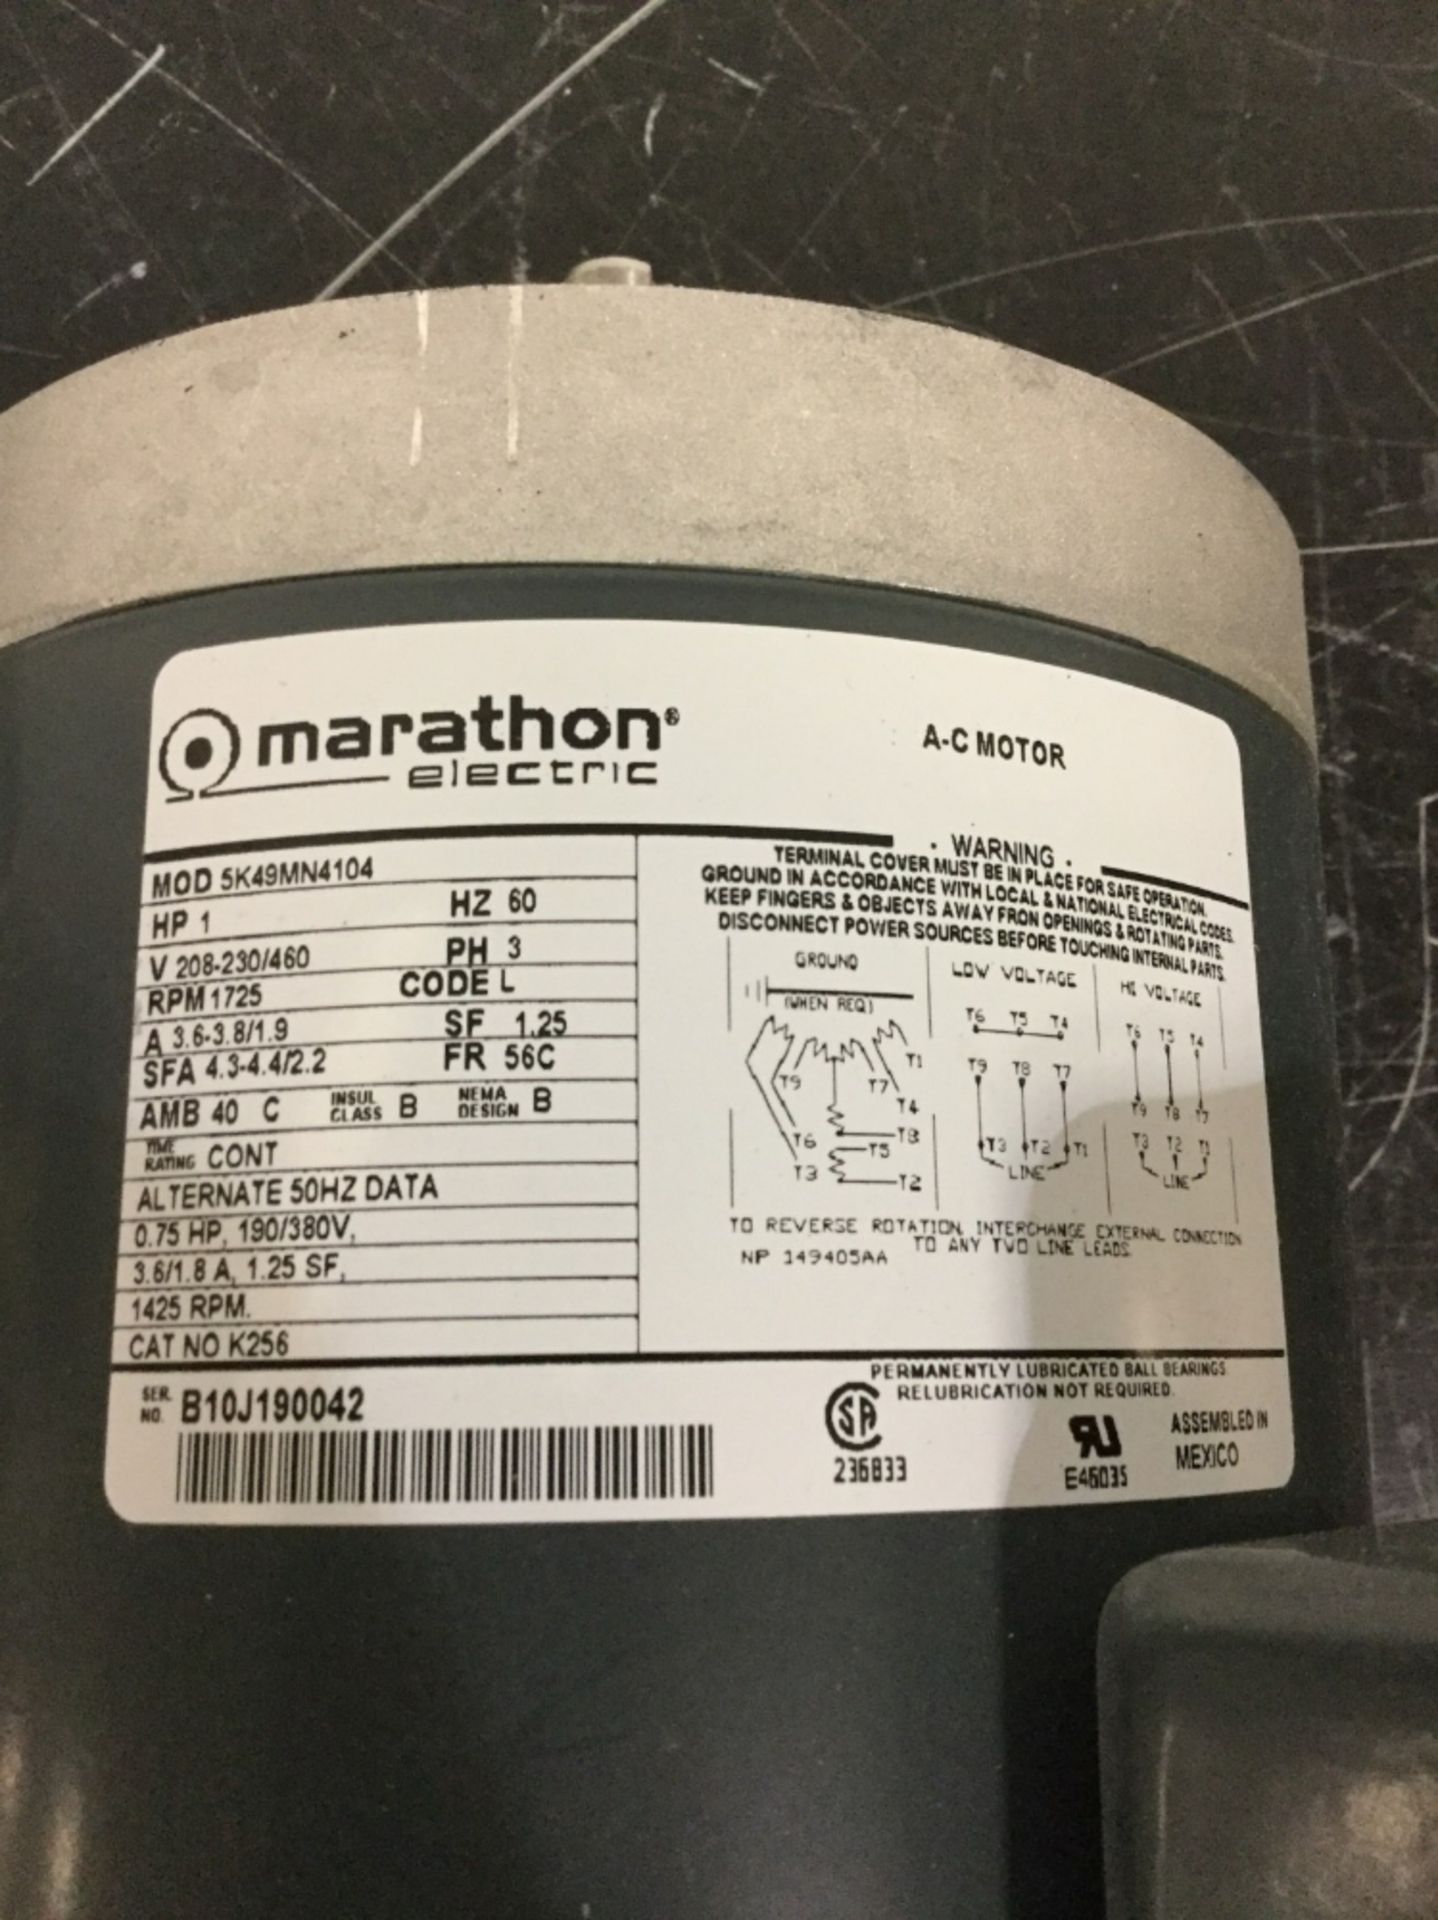 Marathon Electric A/C Motor - Image 2 of 2